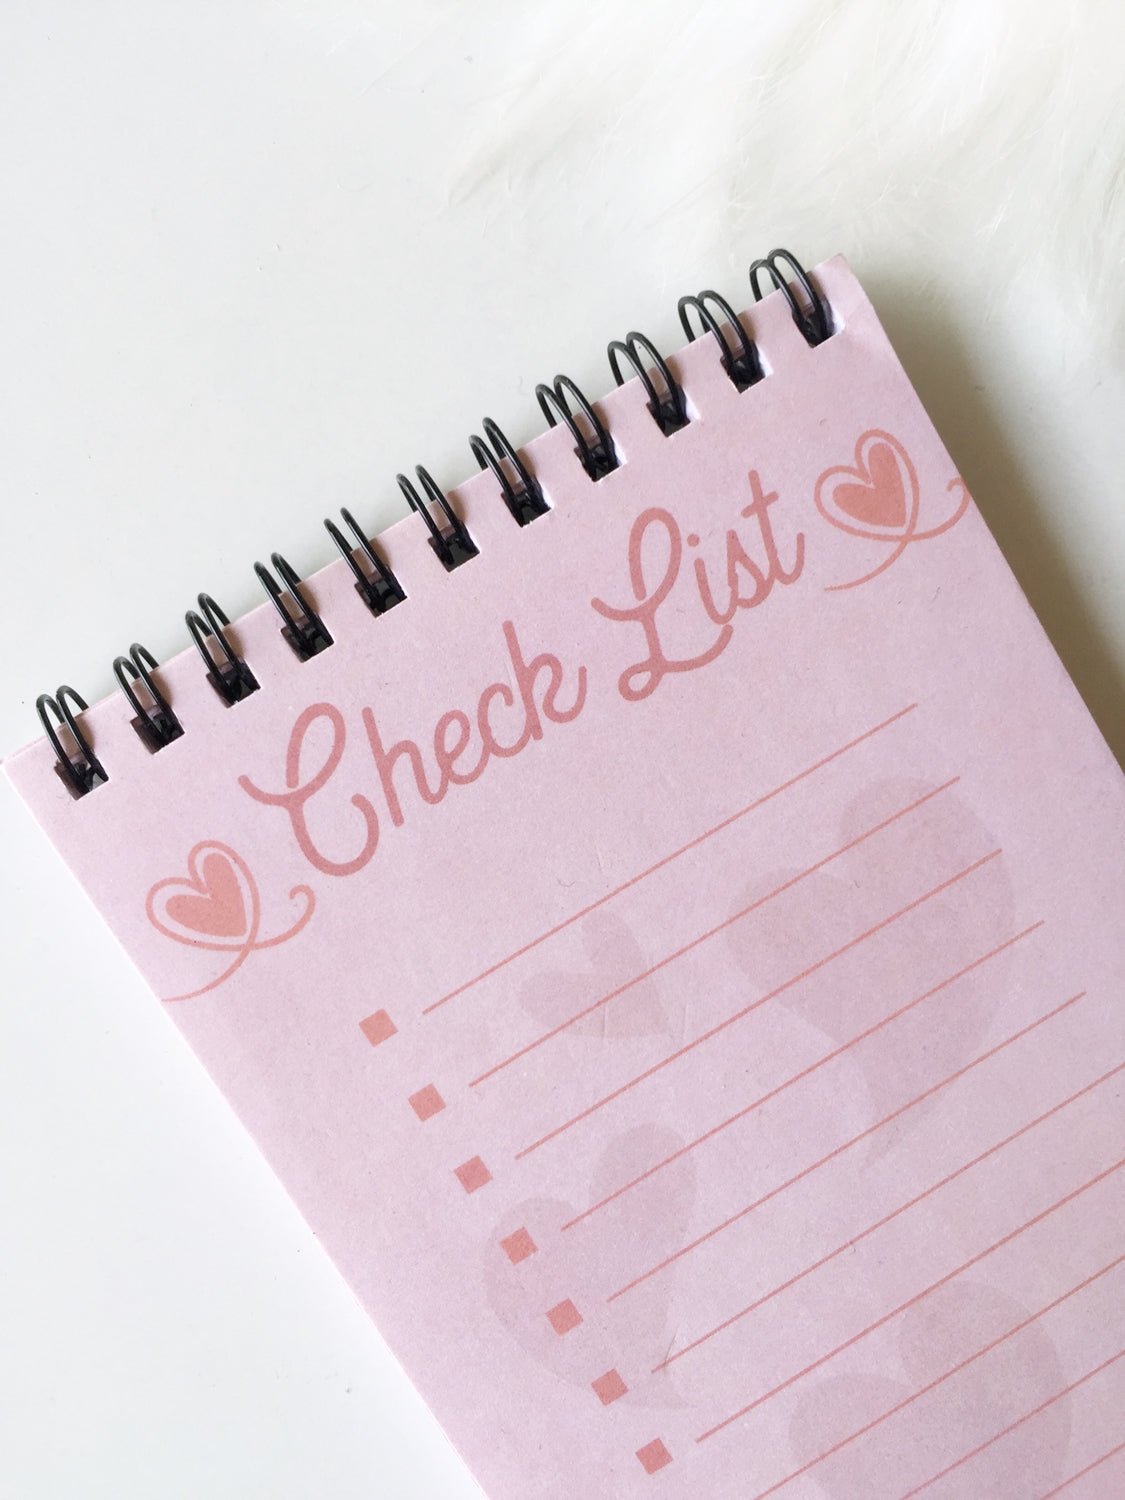 Pink SweetHeart Checklist | 50 sheets | Spiral bound - Supple Room